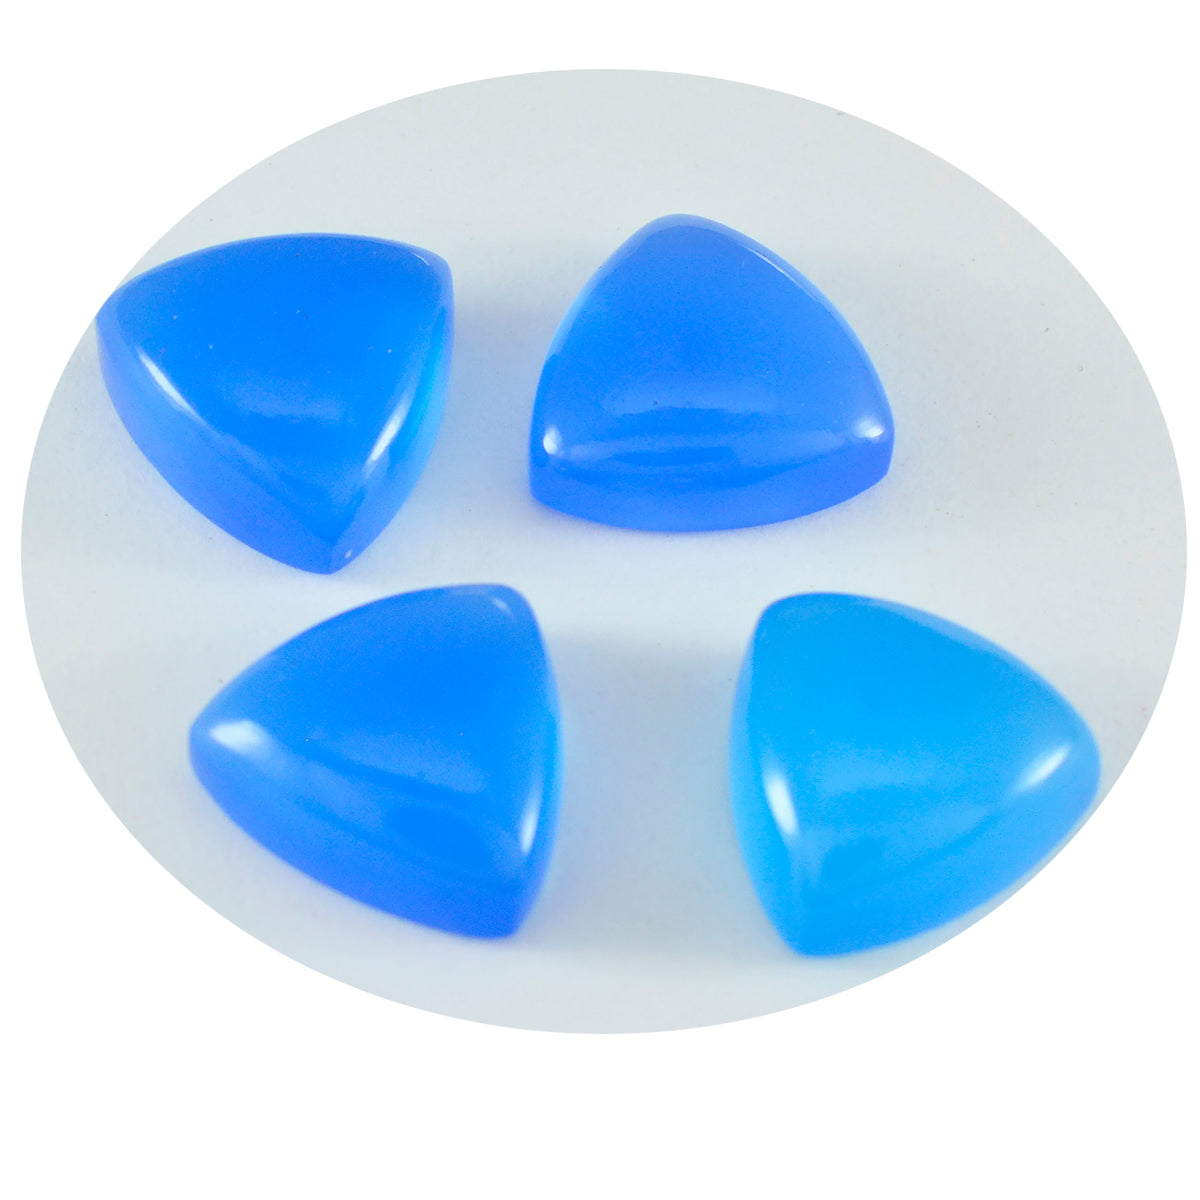 Riyogems 1PC blauwe chalcedoon cabochon 14x14 mm biljoen vorm A+1 kwaliteit losse edelsteen